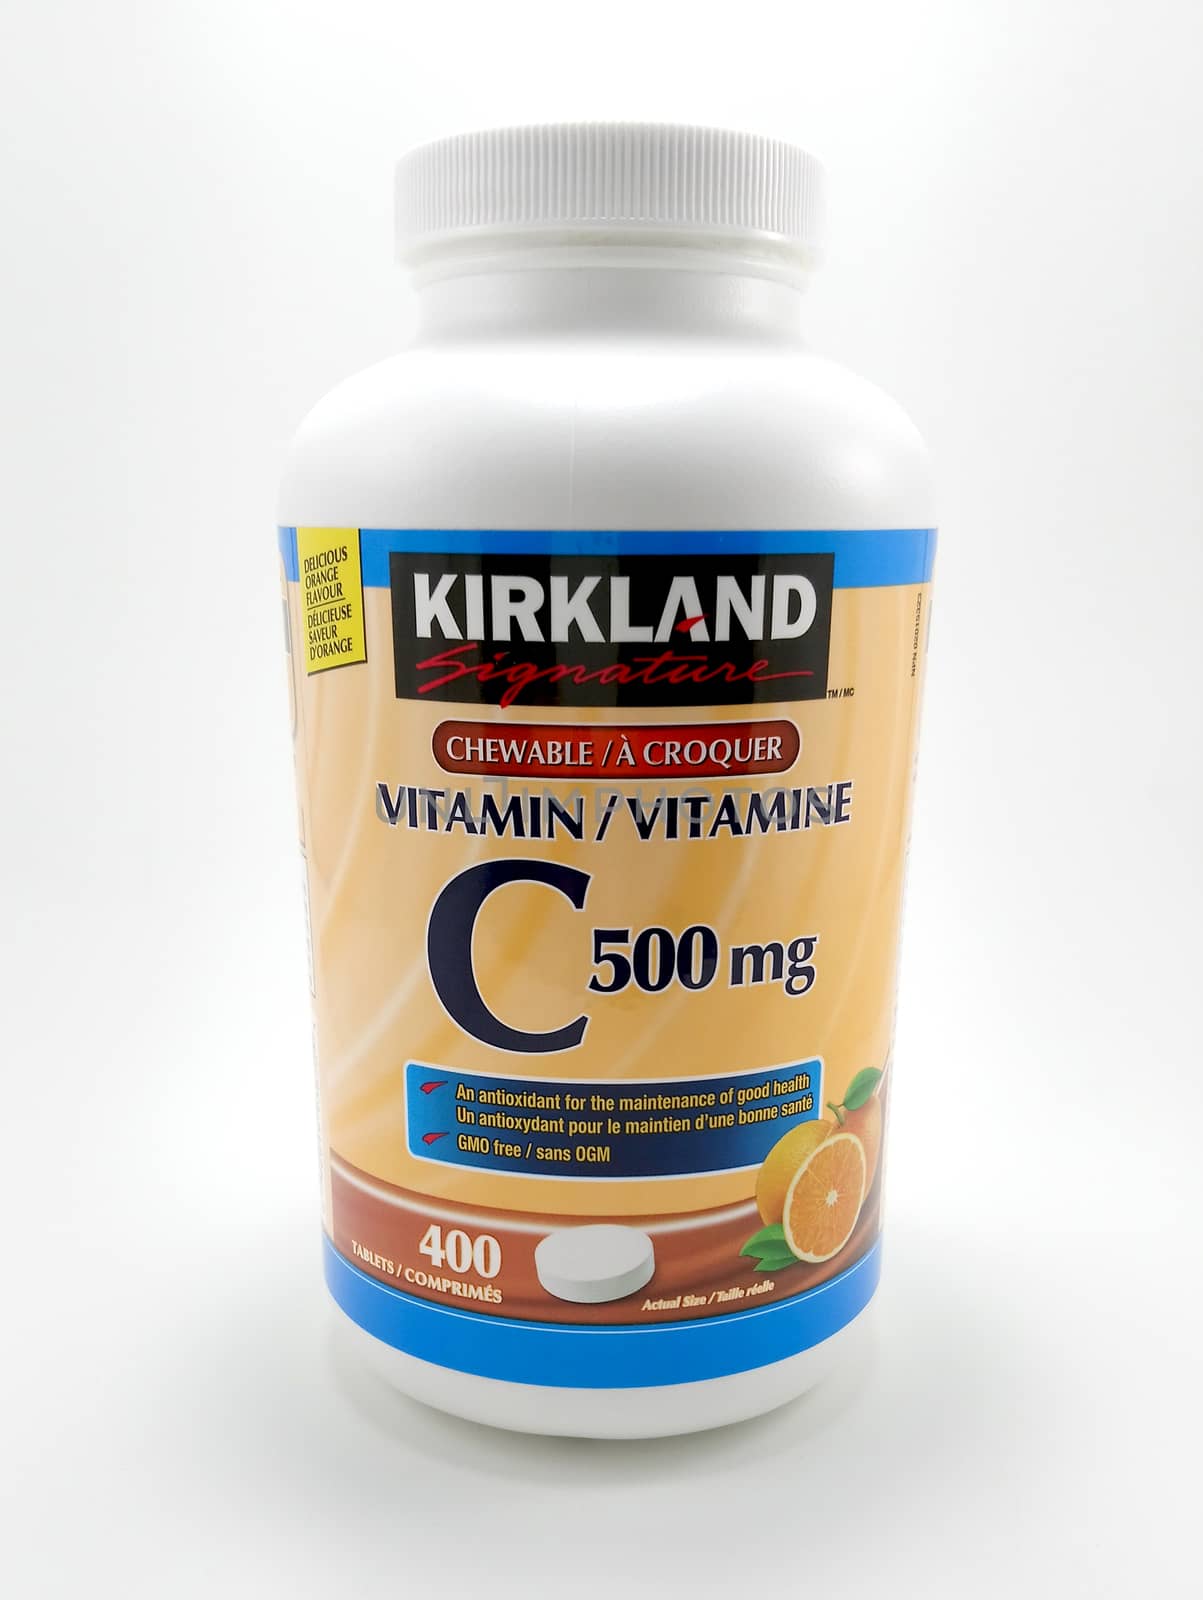 Kirkland signature vitamin c in Manila, Philippines by imwaltersy